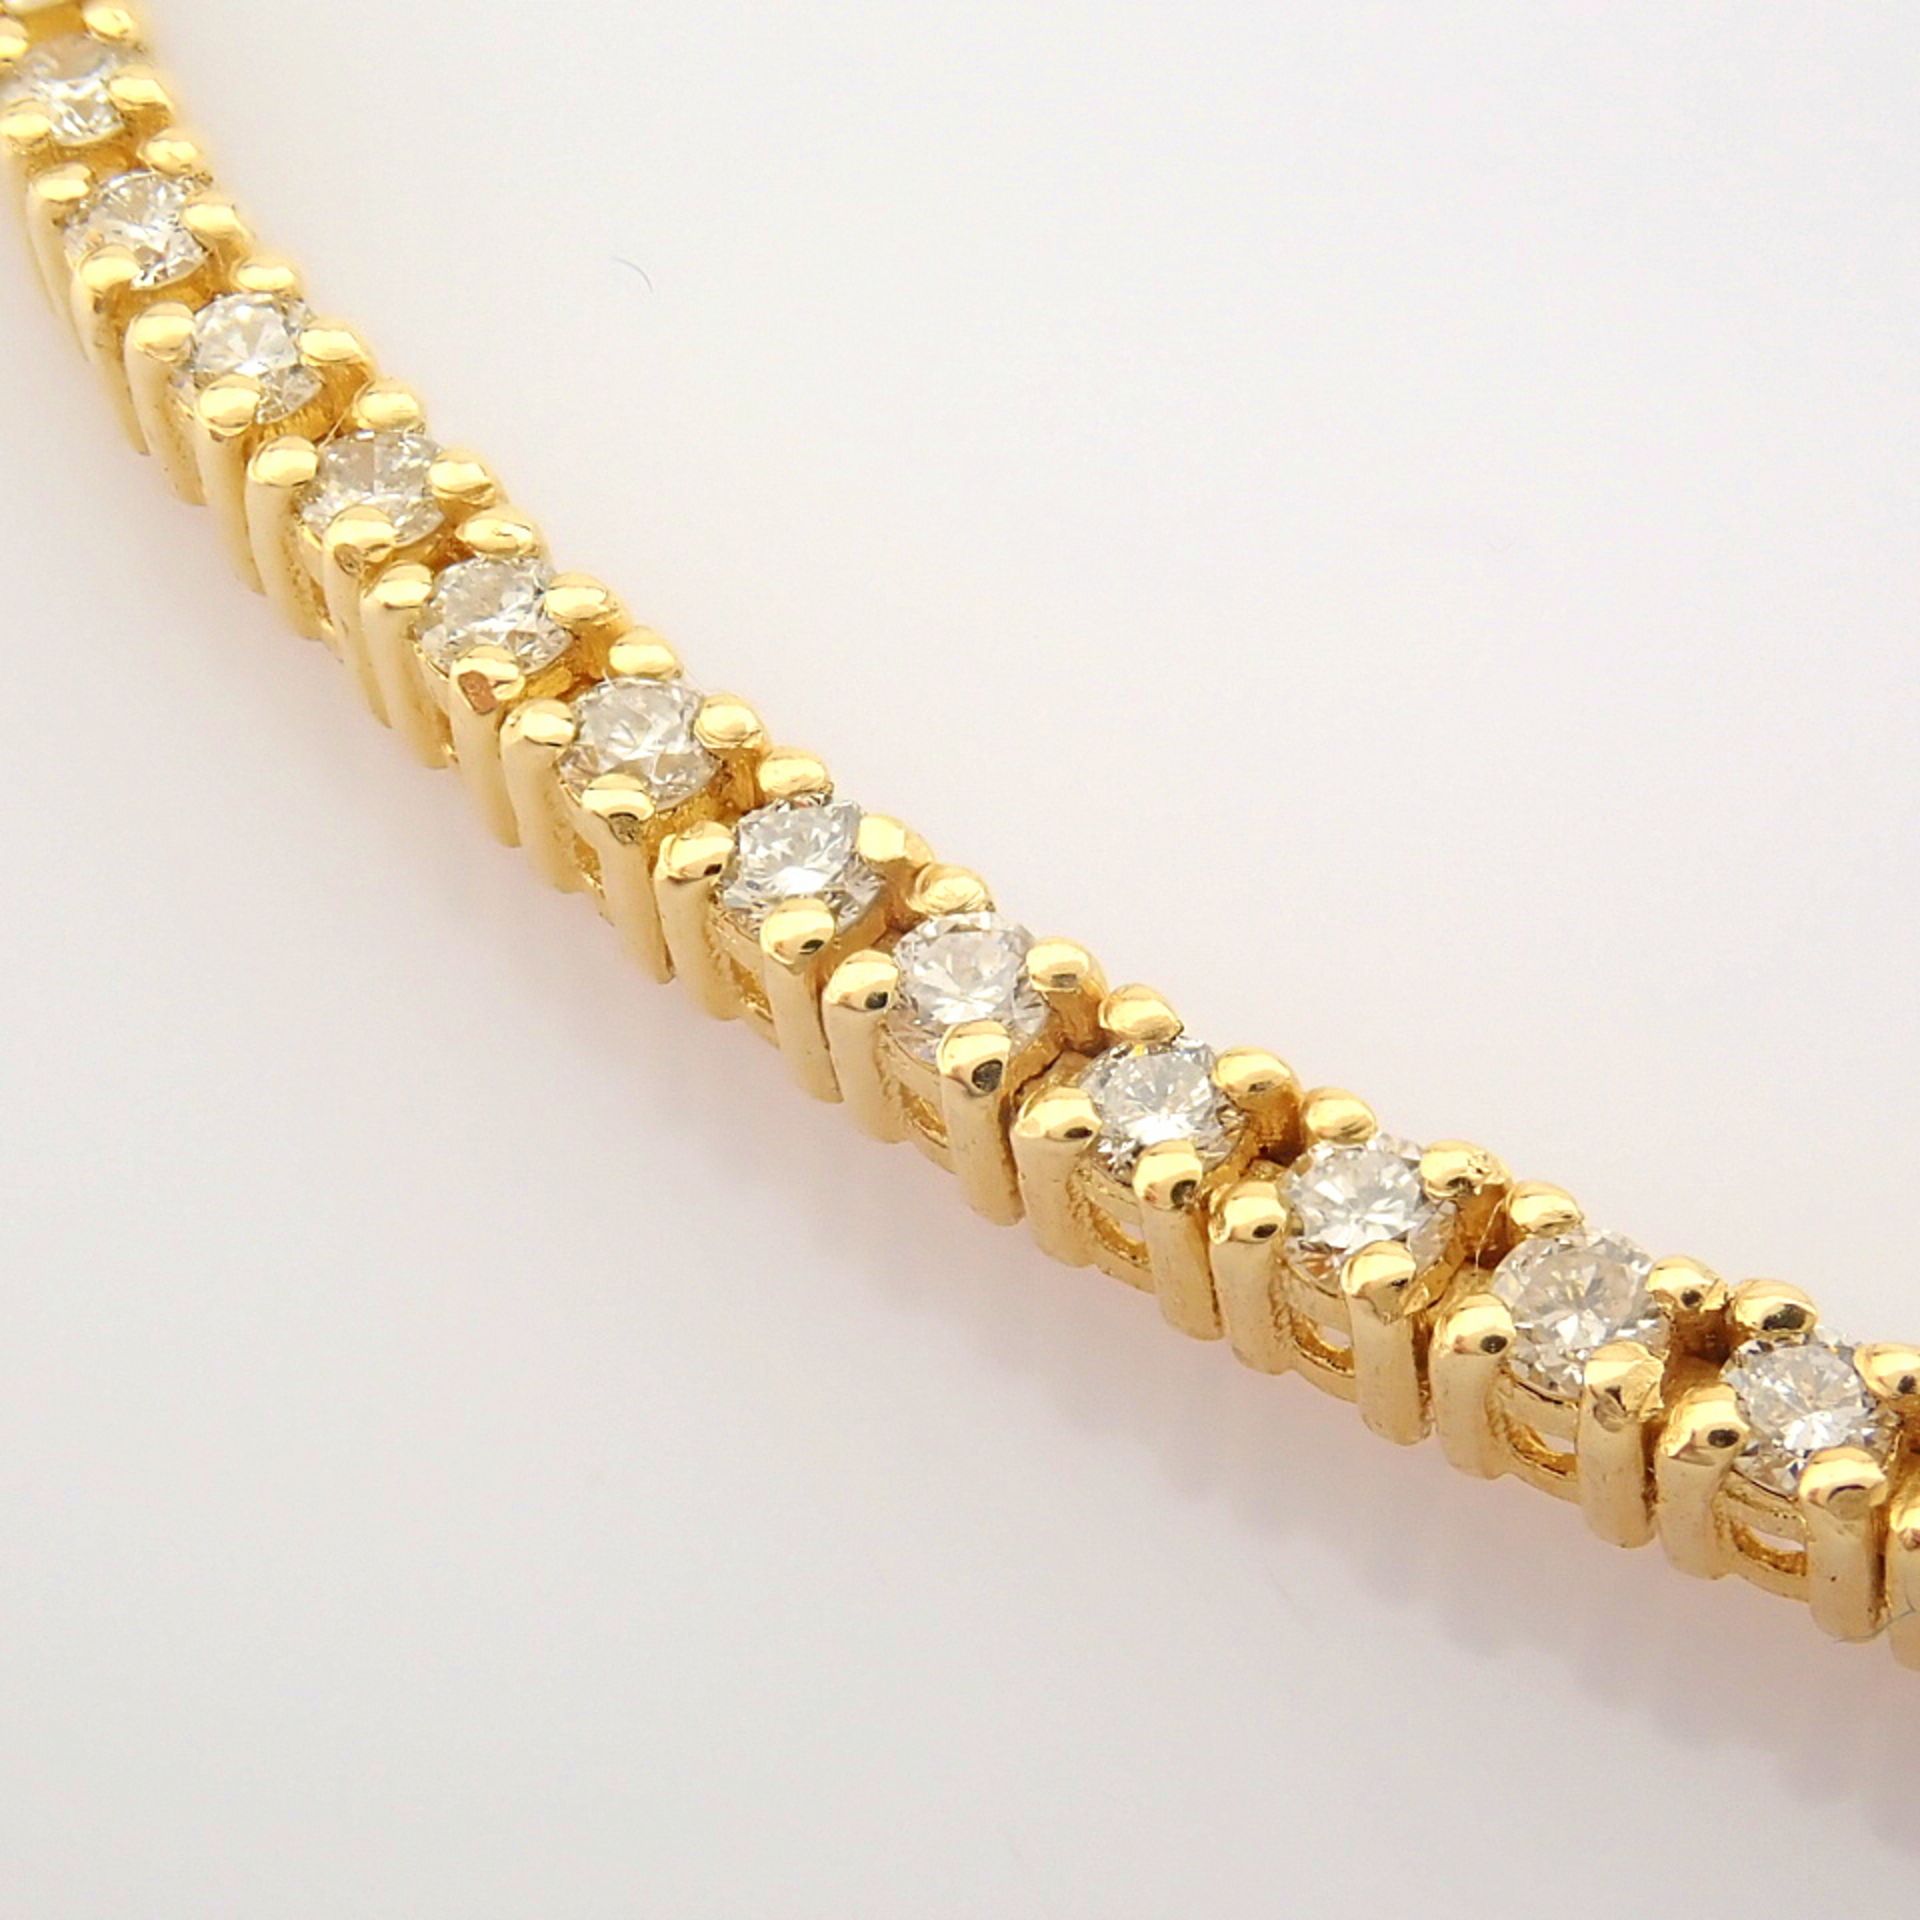 Certificated 14K Yellow Gold Diamond Bracelet - Image 5 of 10